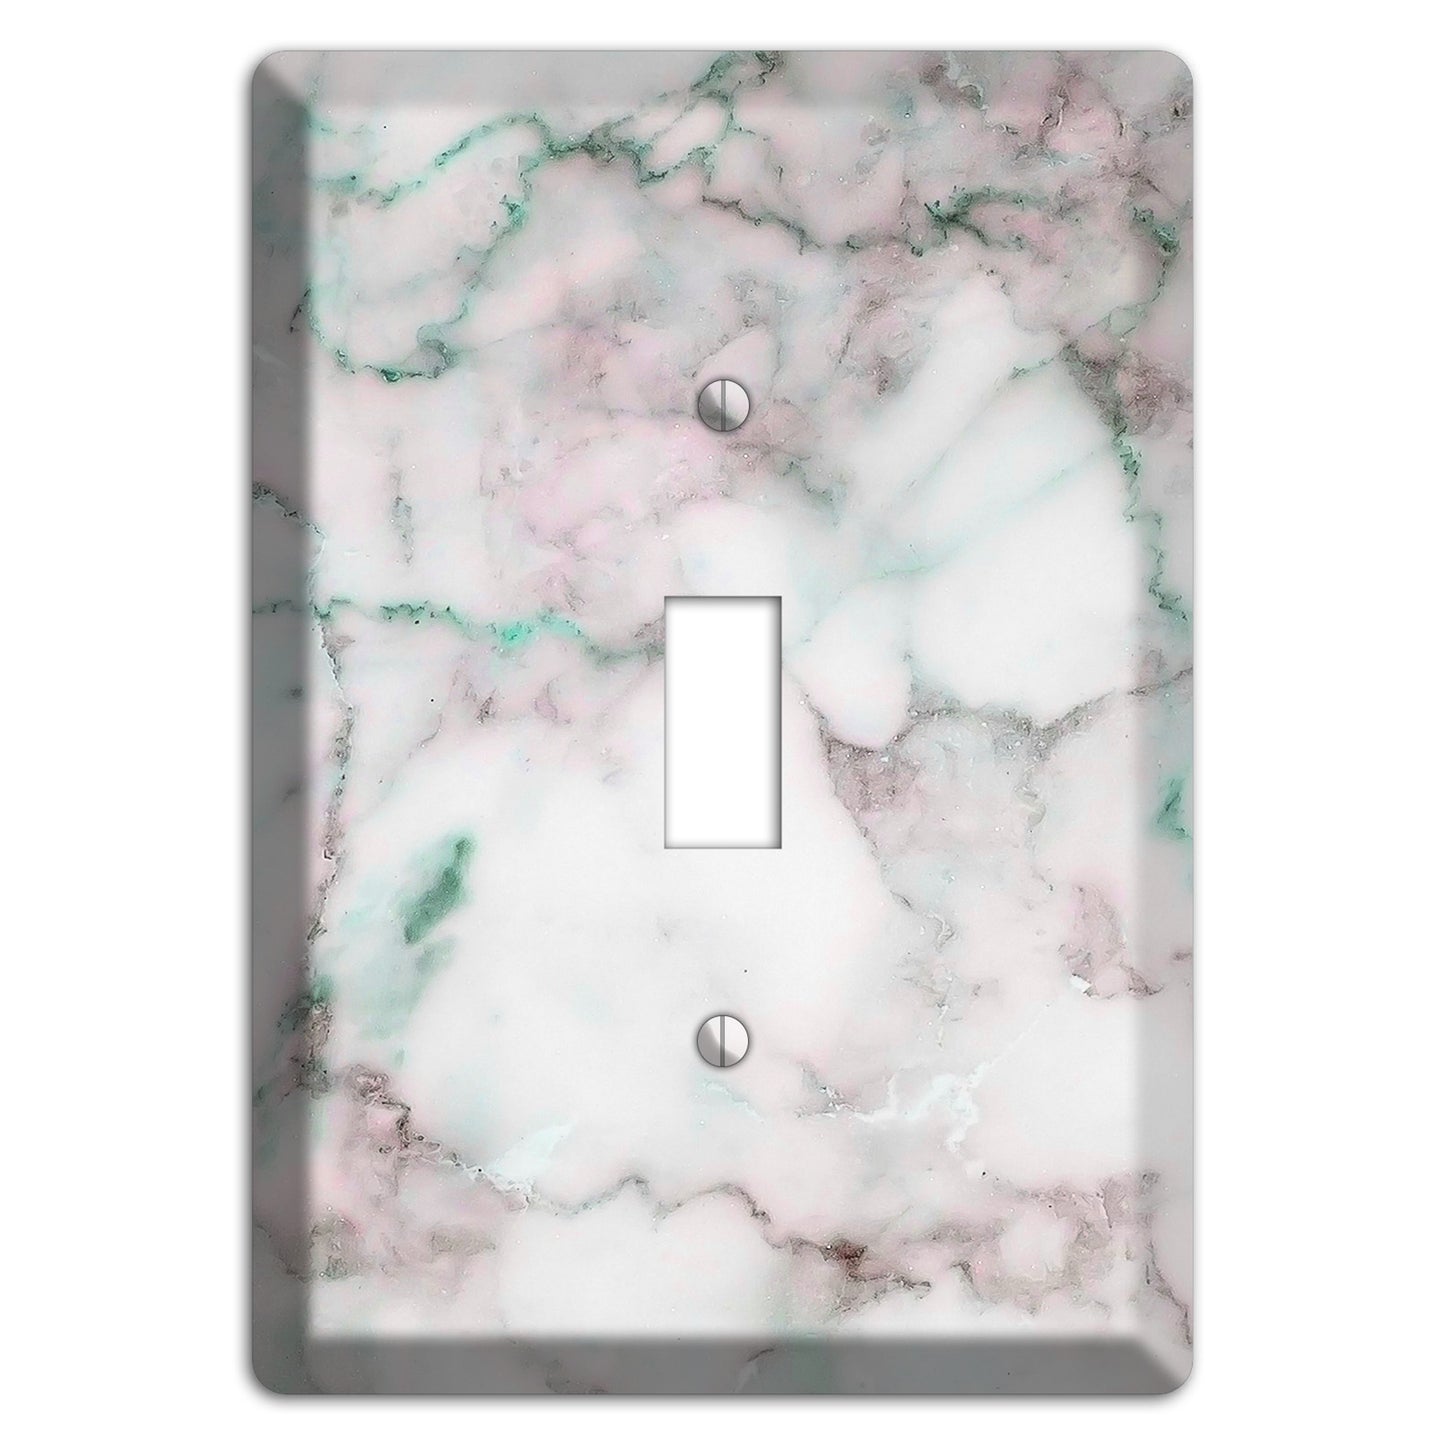 Nebula Marble Cover Plates